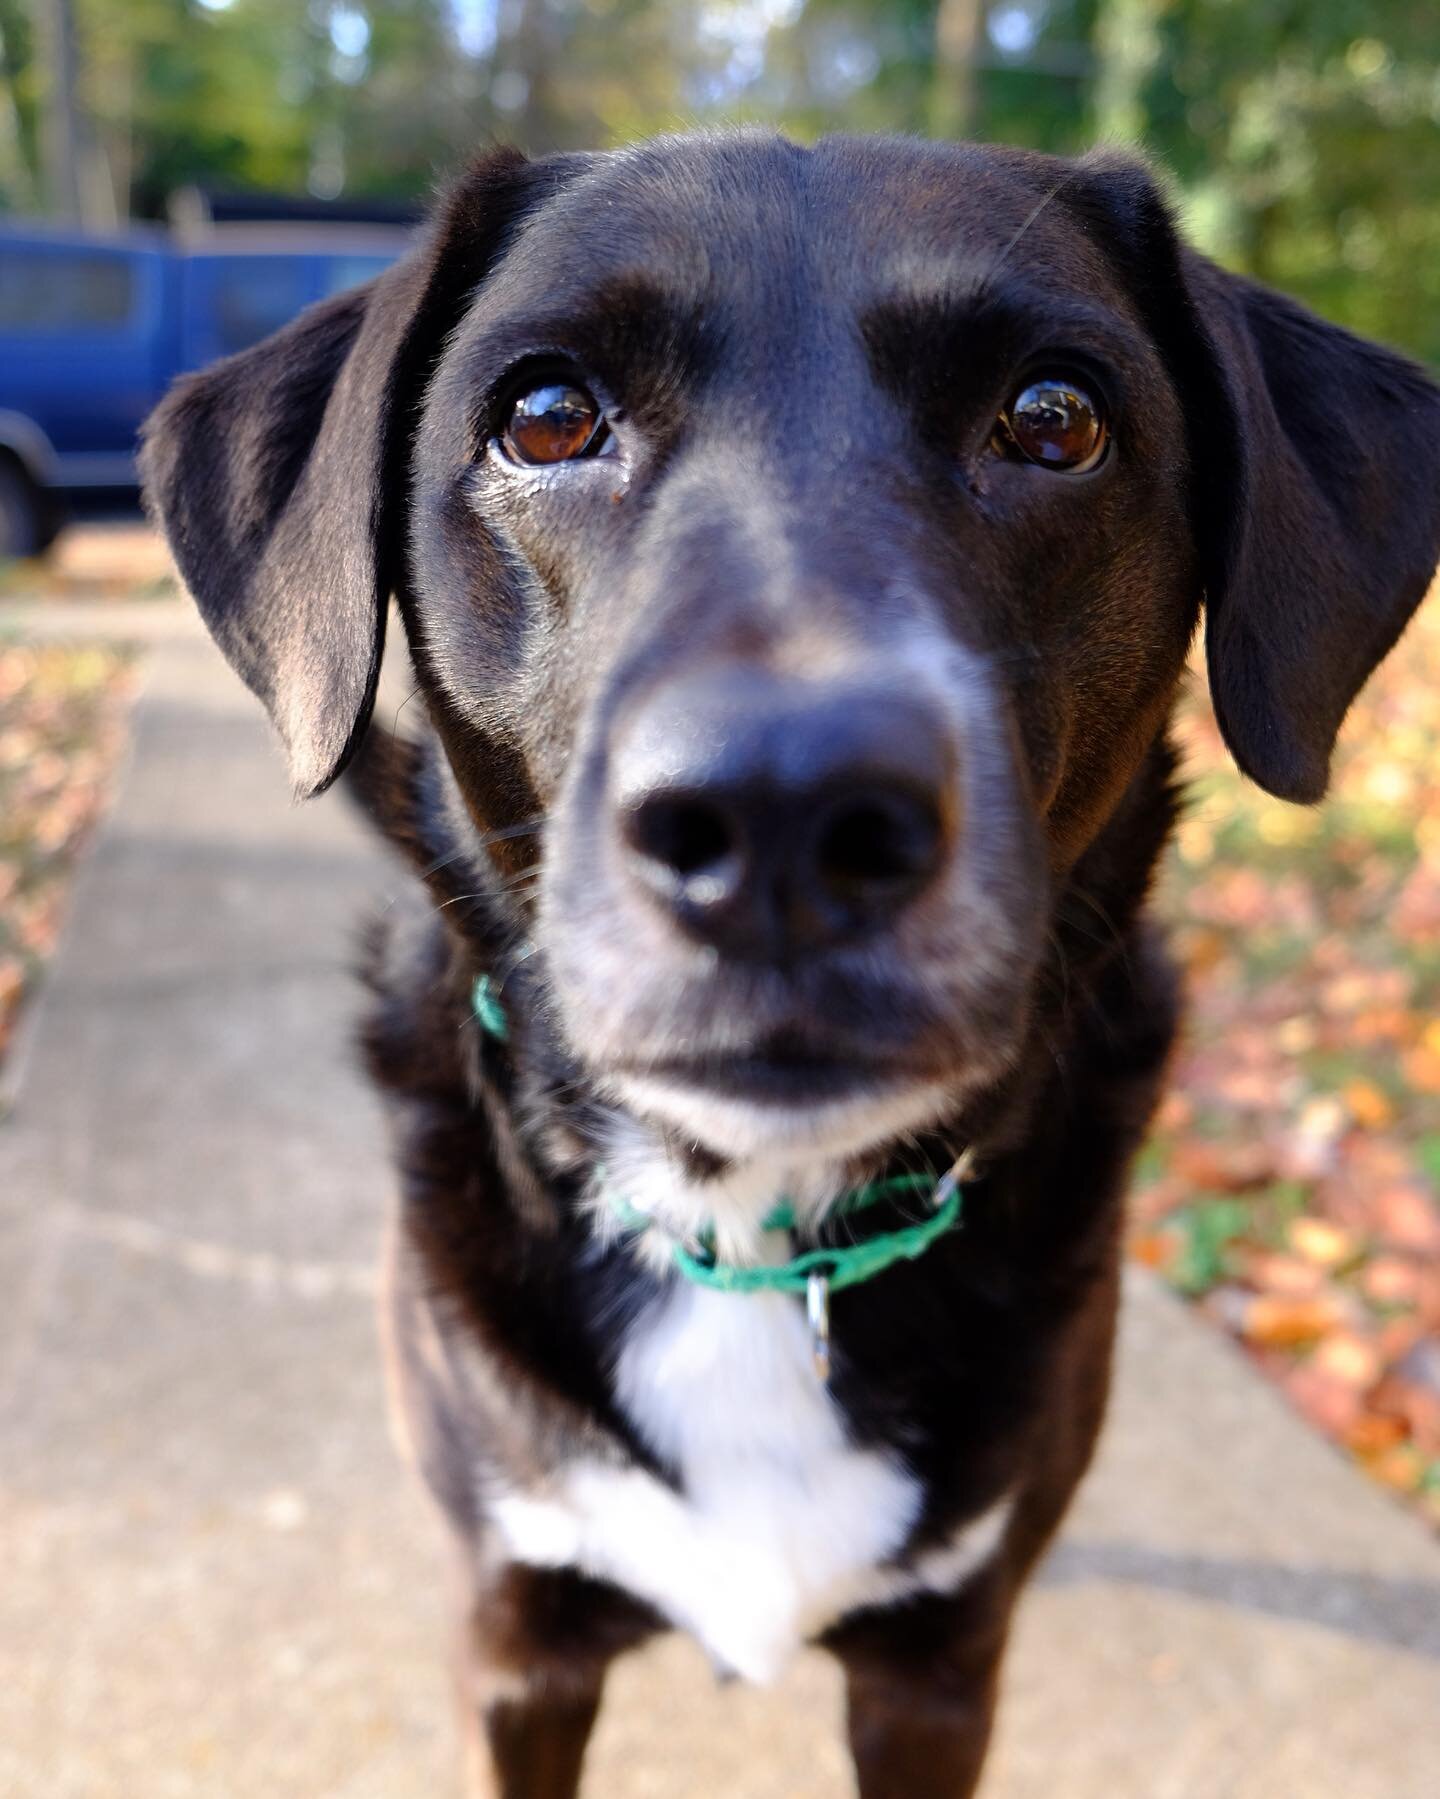 always looking for a treat. 

 #dogsofinstagram #dog #adoptdontshop #atlanta